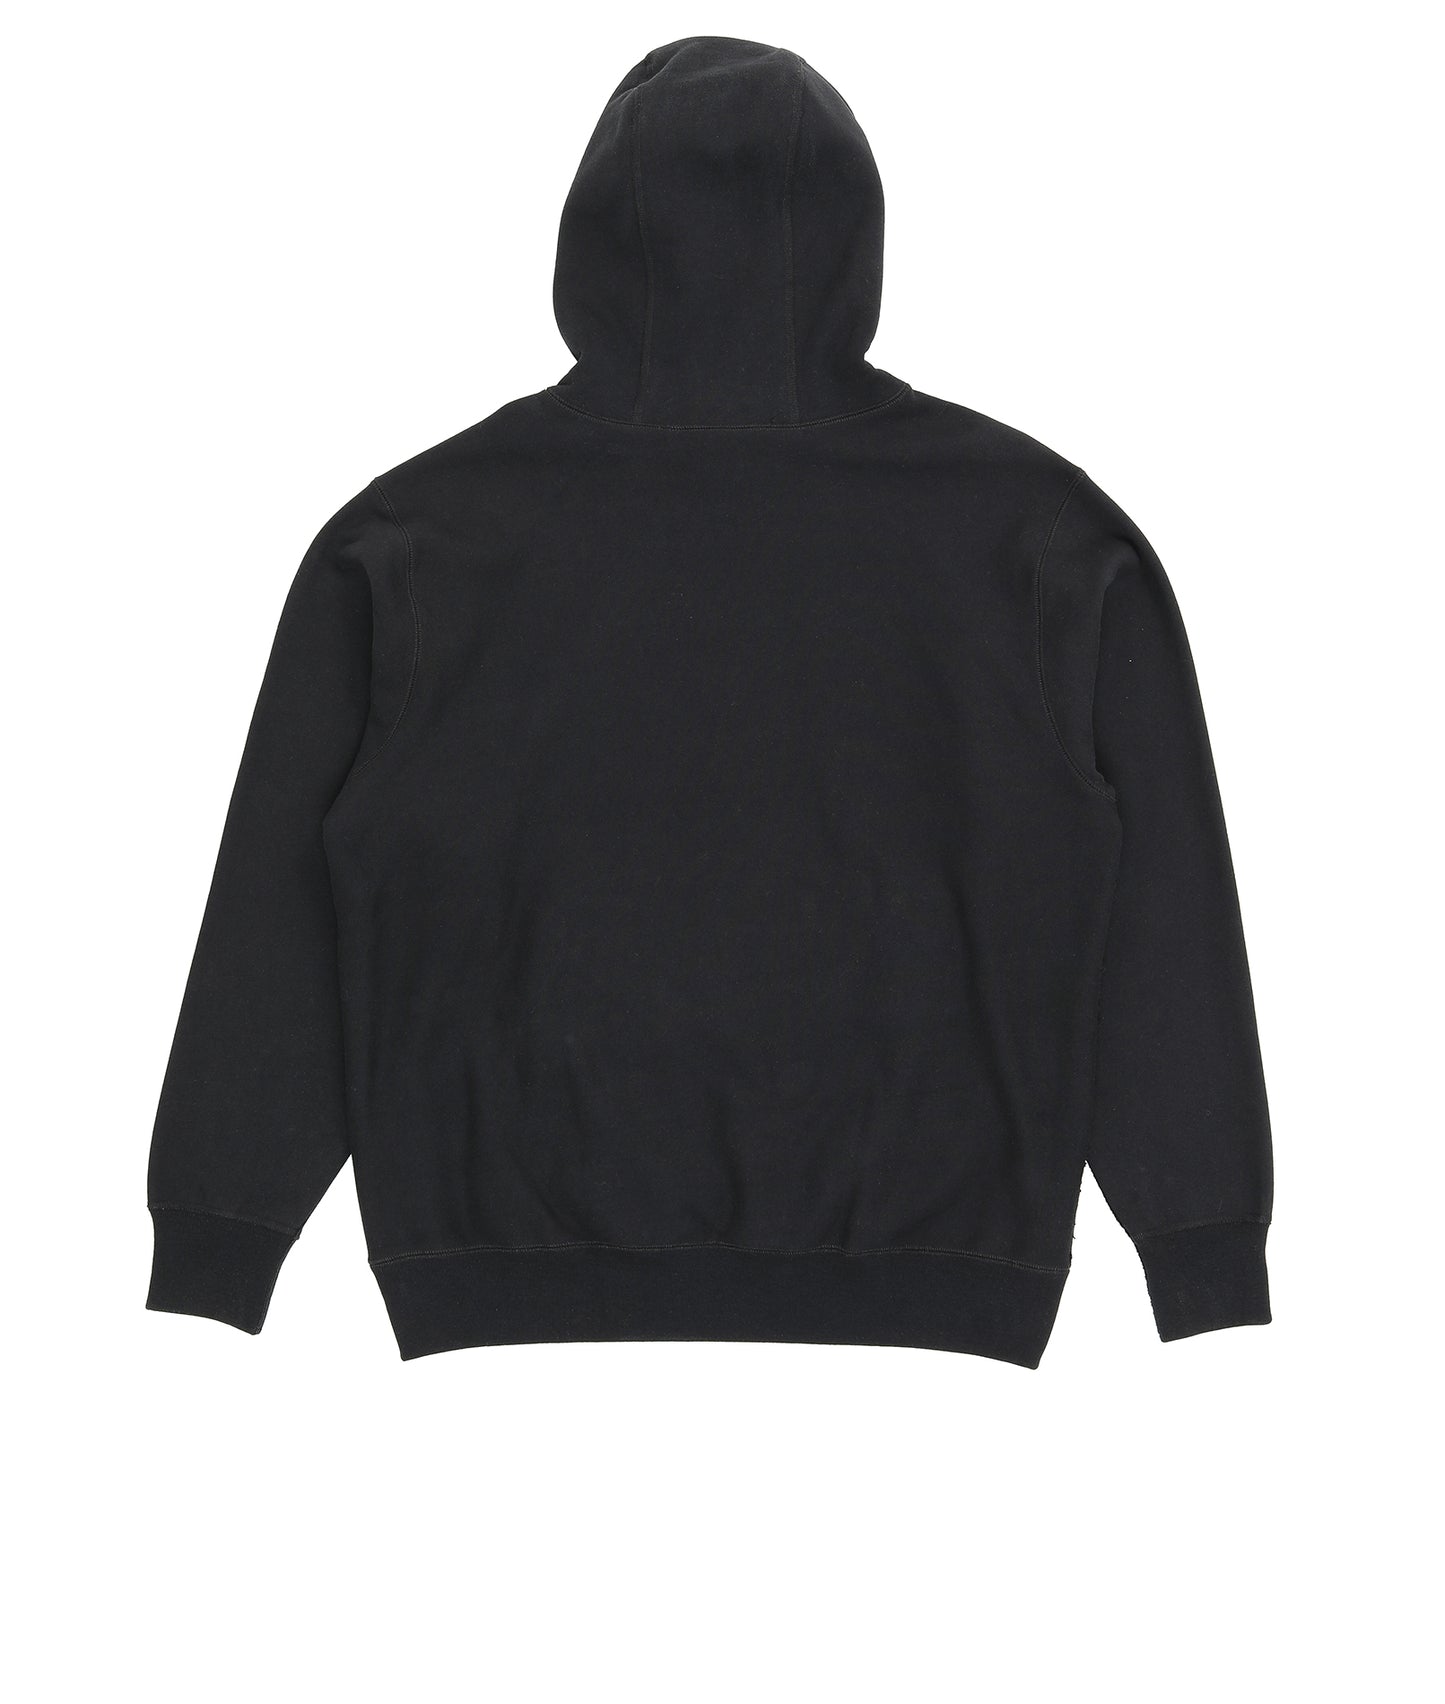 FTC & Pop Hooded Sweater Black